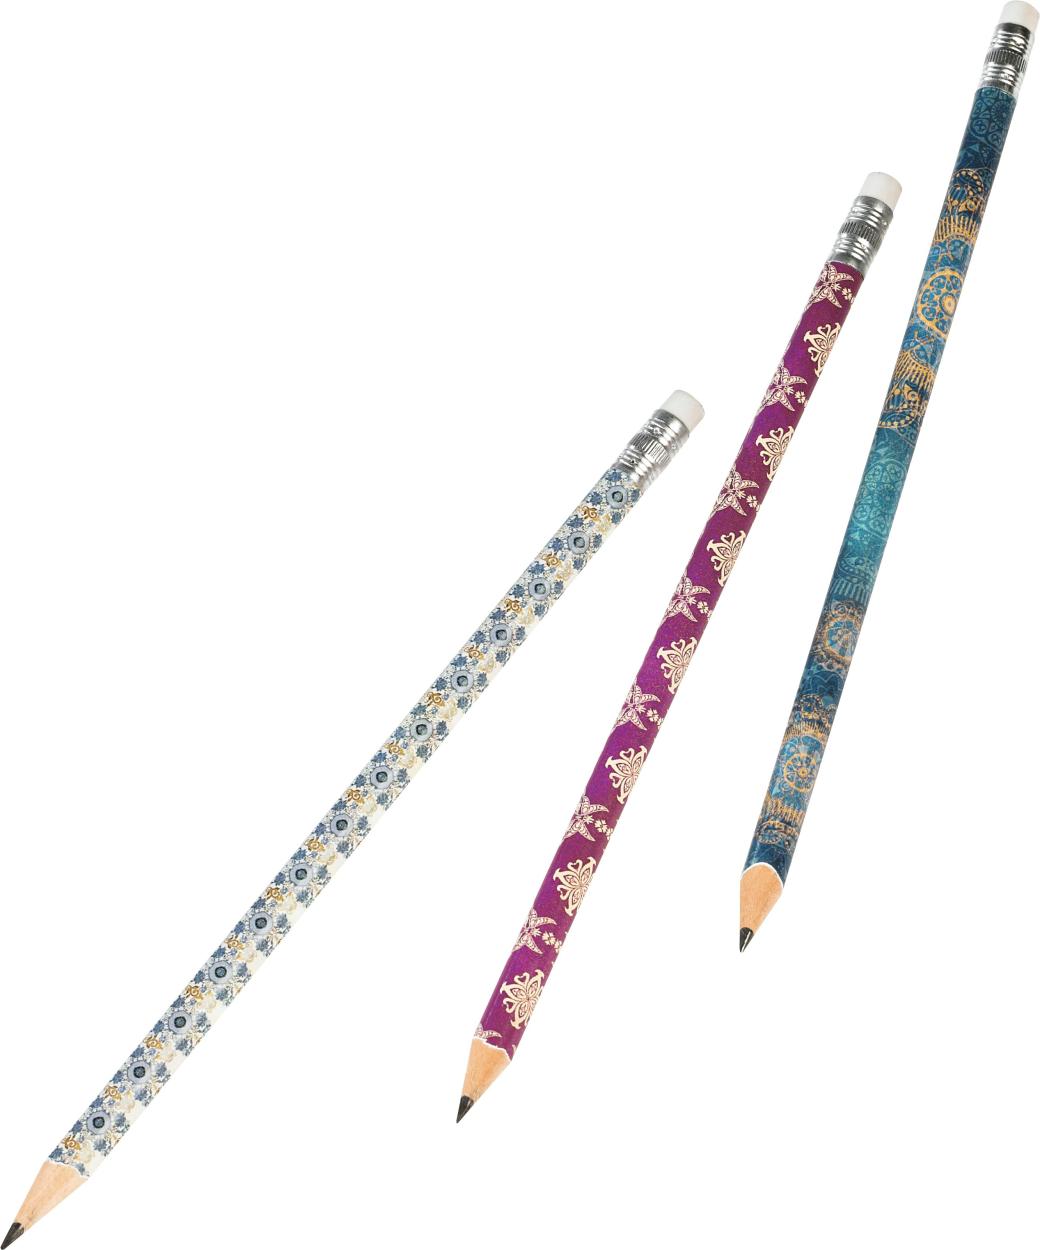 Bleistifte in Geschenkschachtel „Zauber Indiens“